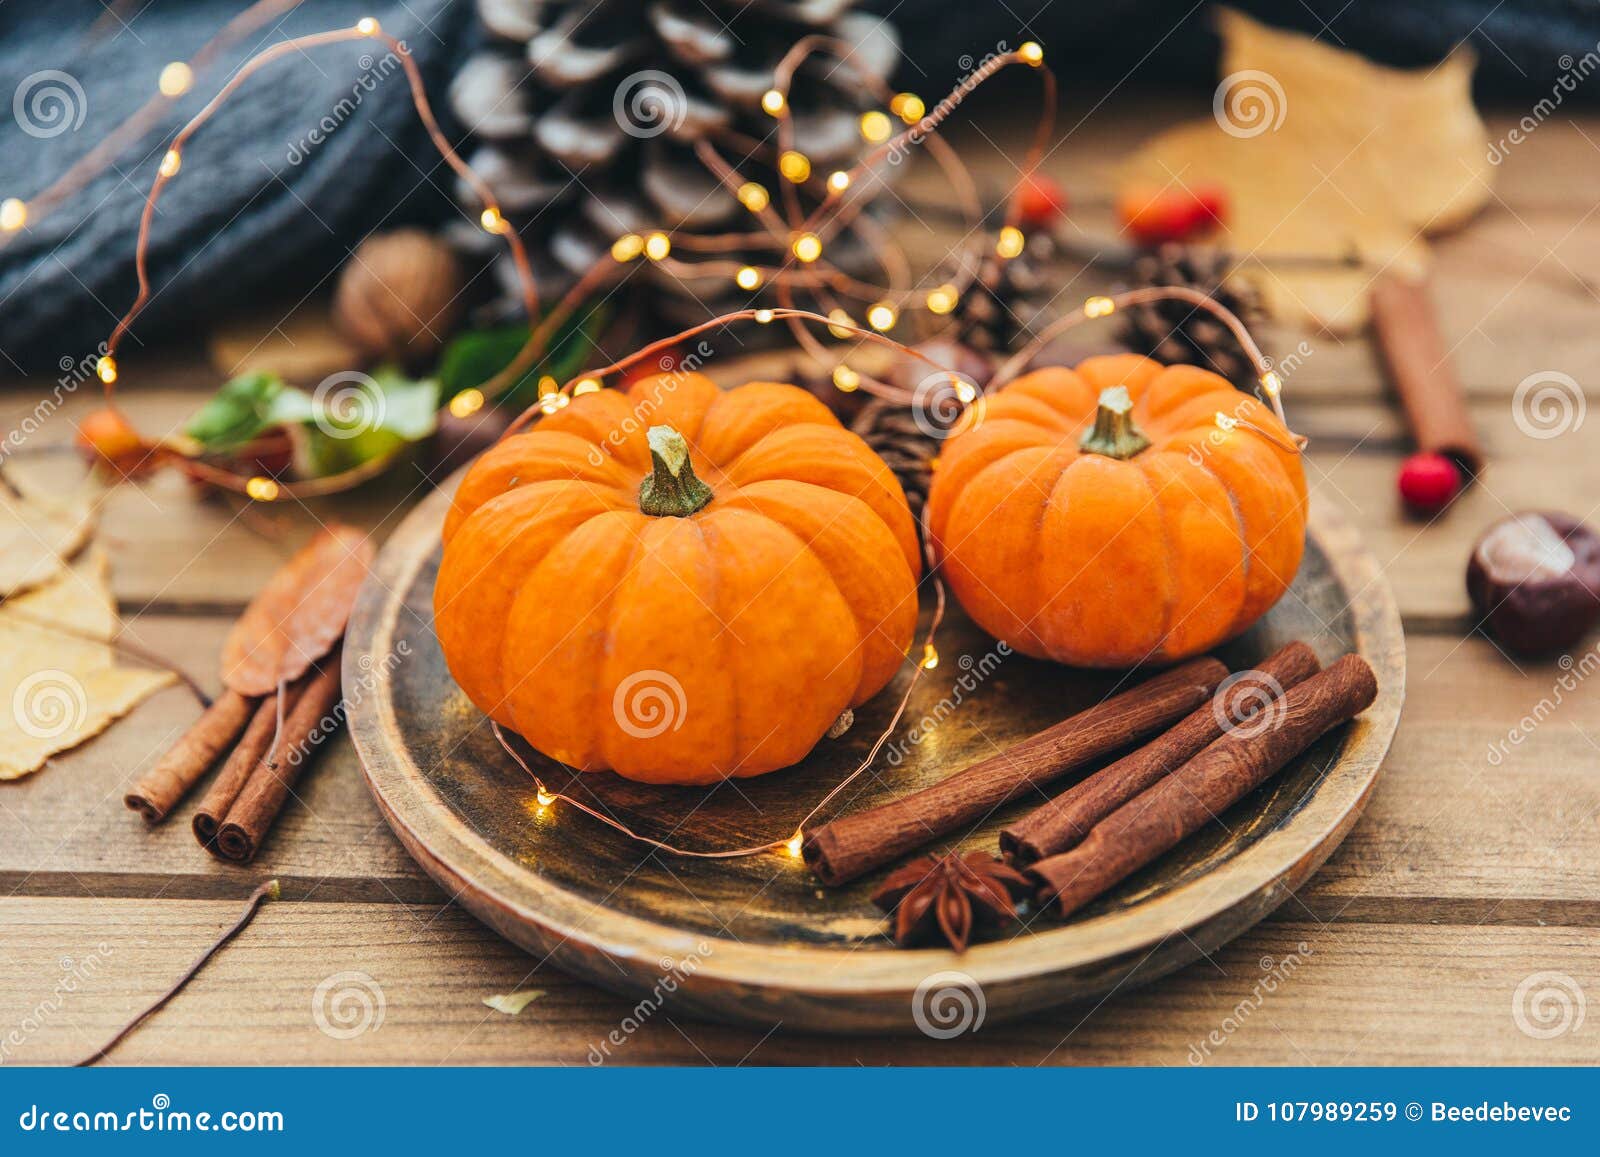 autumn composition. pumpkin and cinnamon